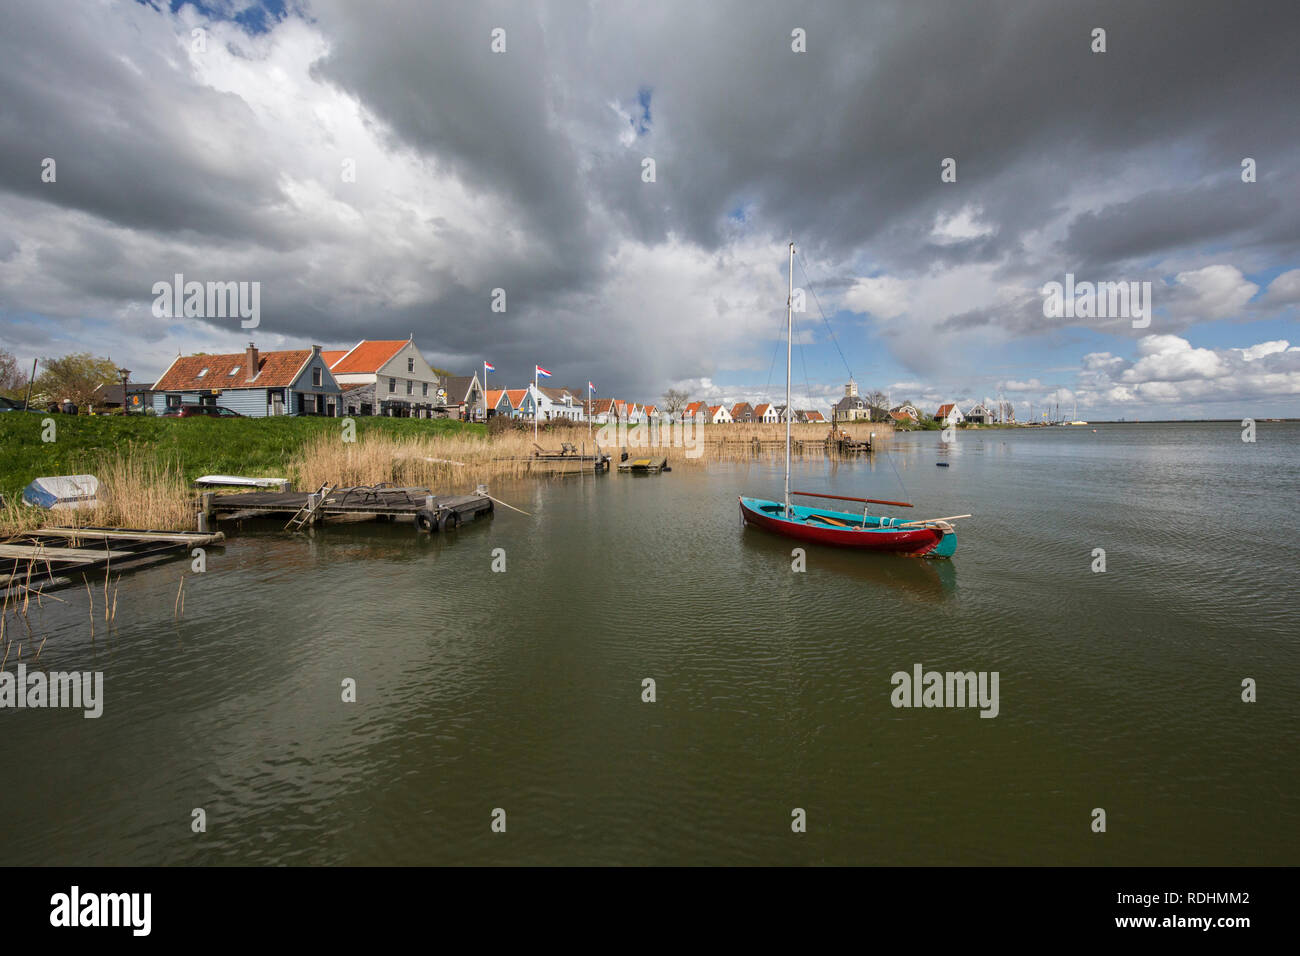 Threatening clouds and hailstorm. Lake called IJmeer. Durgerdam, Amsterdam, The Netherlands. Stock Photo